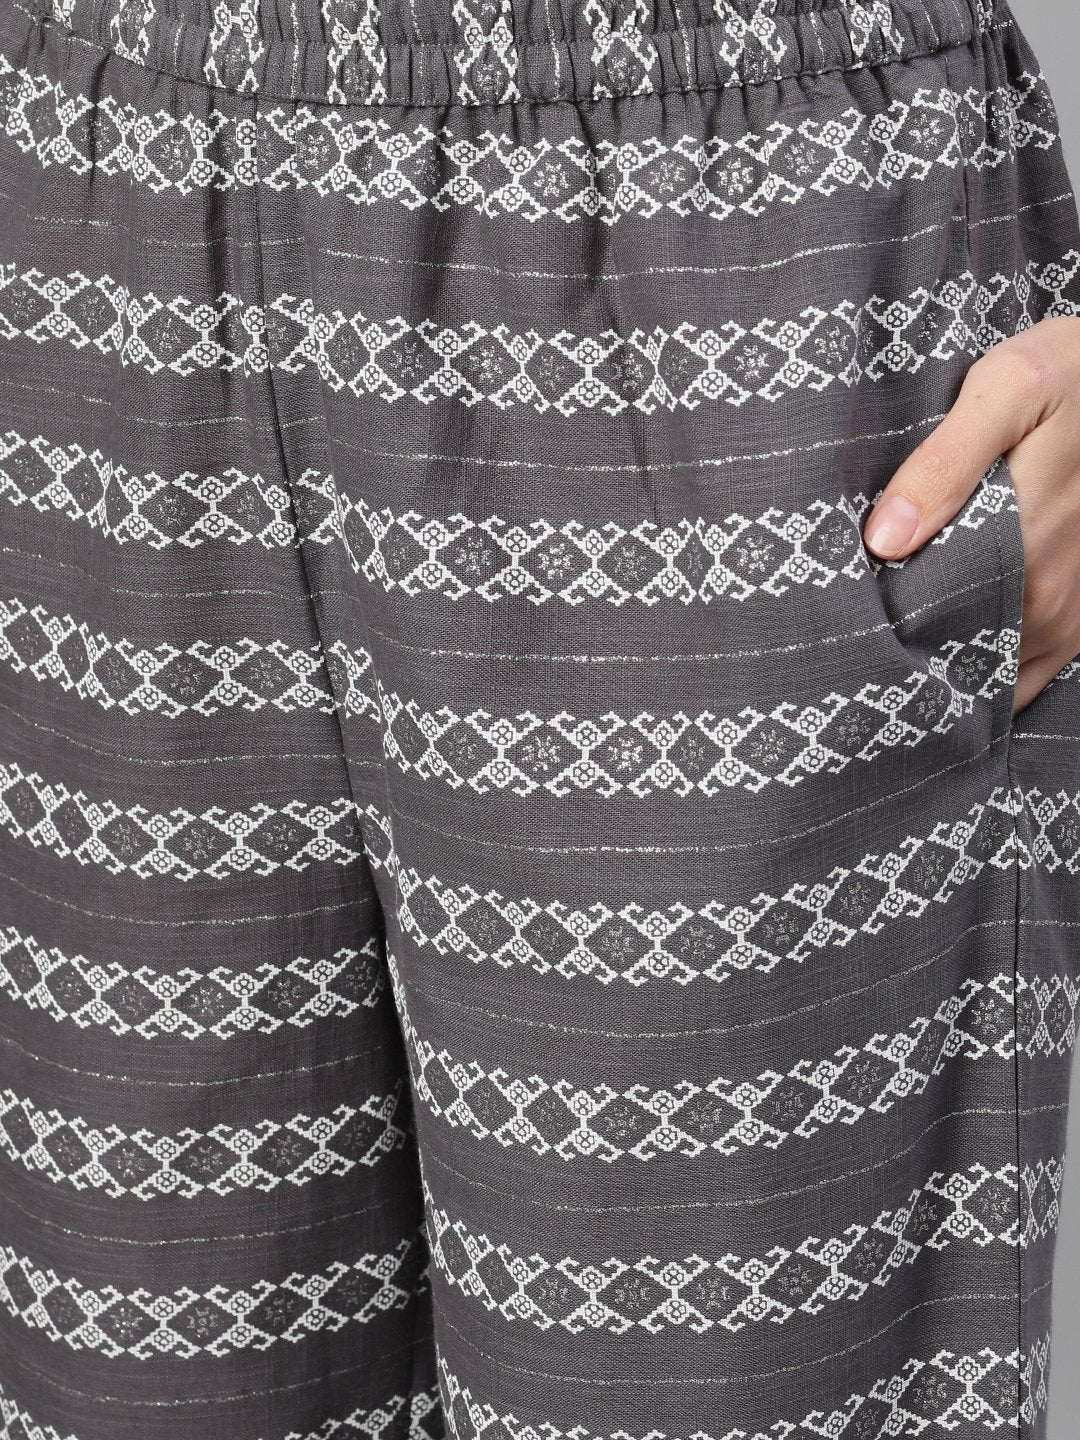 Women's Steel Grey Three-Quarter Sleeves Printed Kurta-Palazzo With Pockets And Face Mask - Nayo Clothing